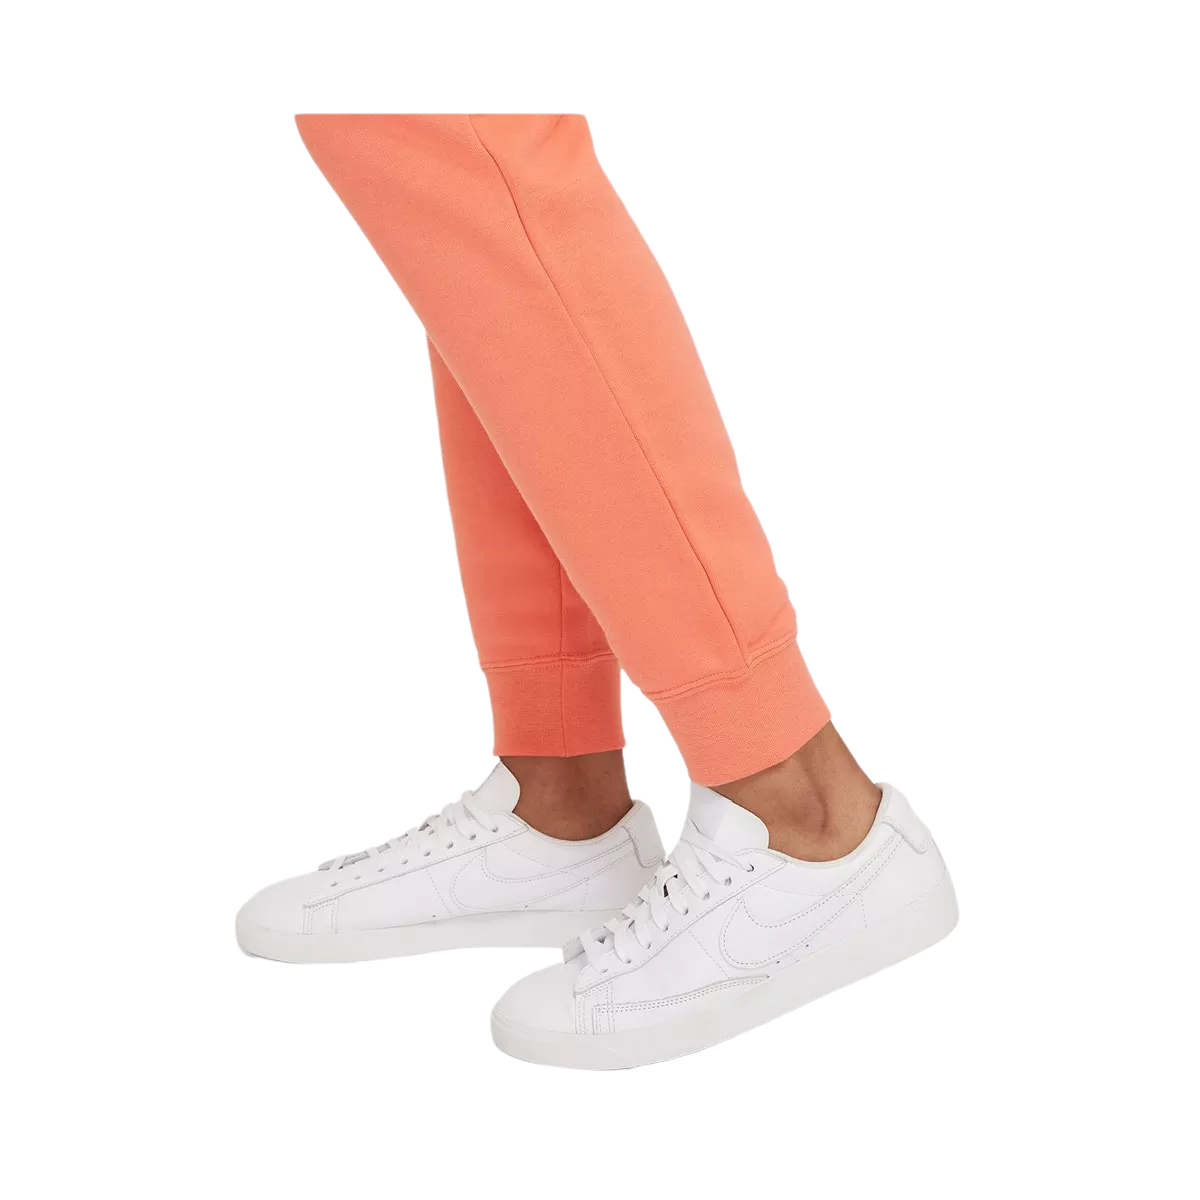 Nike Women's Essential Fleece Pants